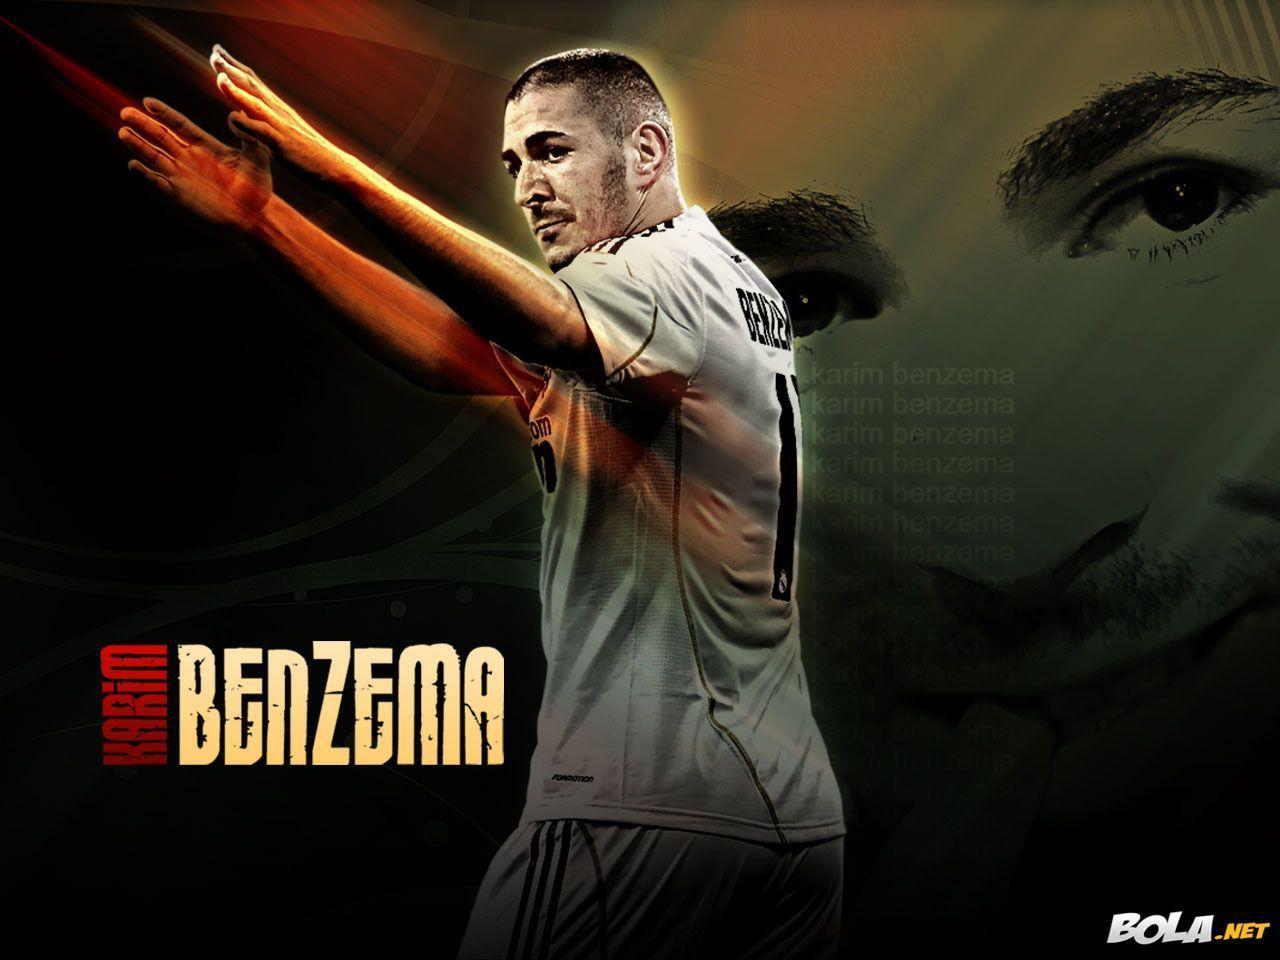 Karim Benzema Real Madrid Wallpaper